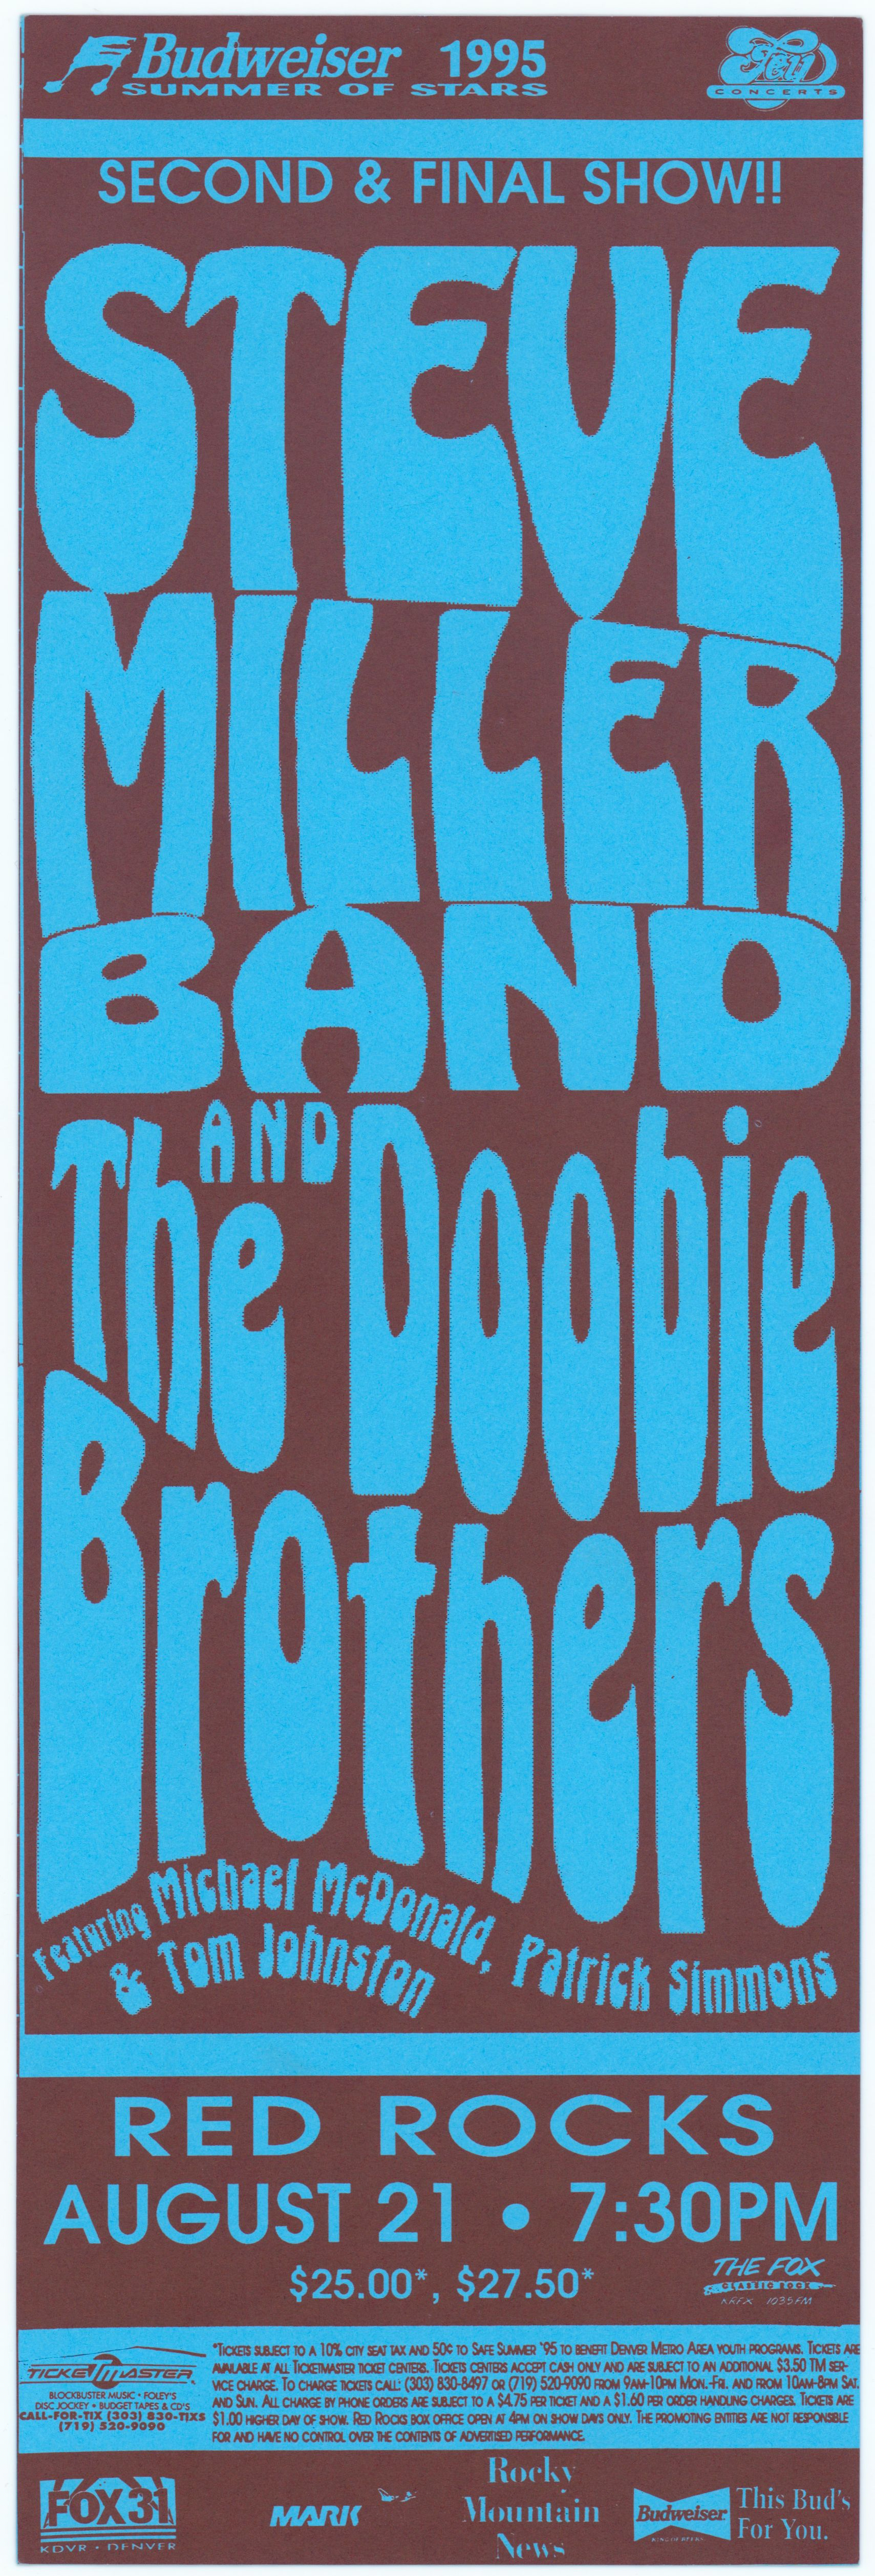 Steve Miller Band & The Doobie Brothers 1995 Red Rocks Aug 21 Concert Poster